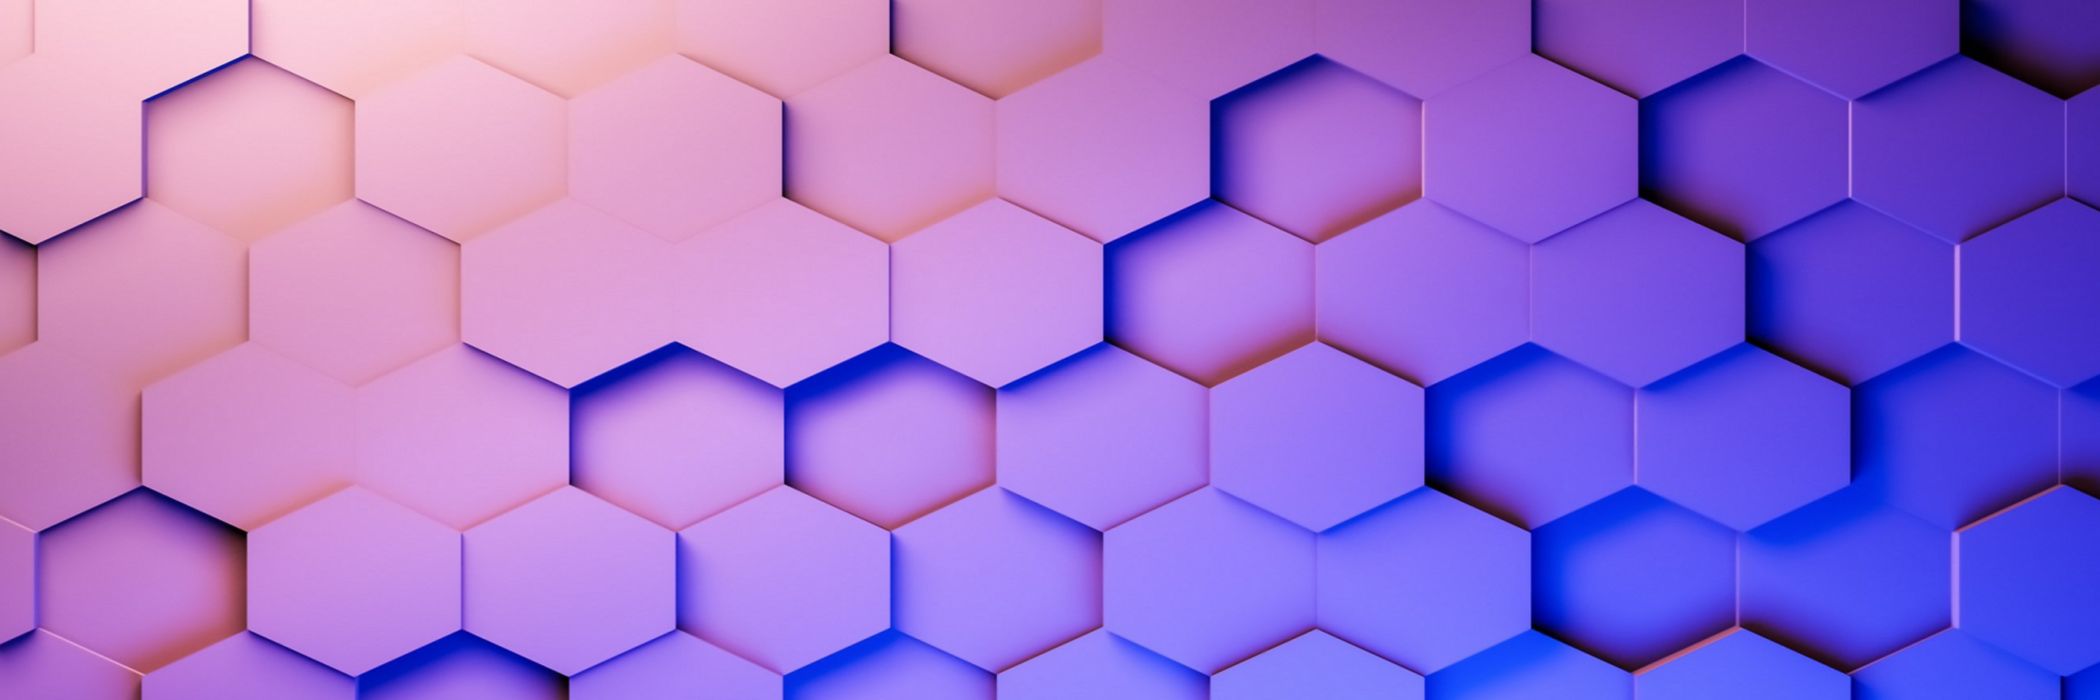 purple blue hexagon abstract